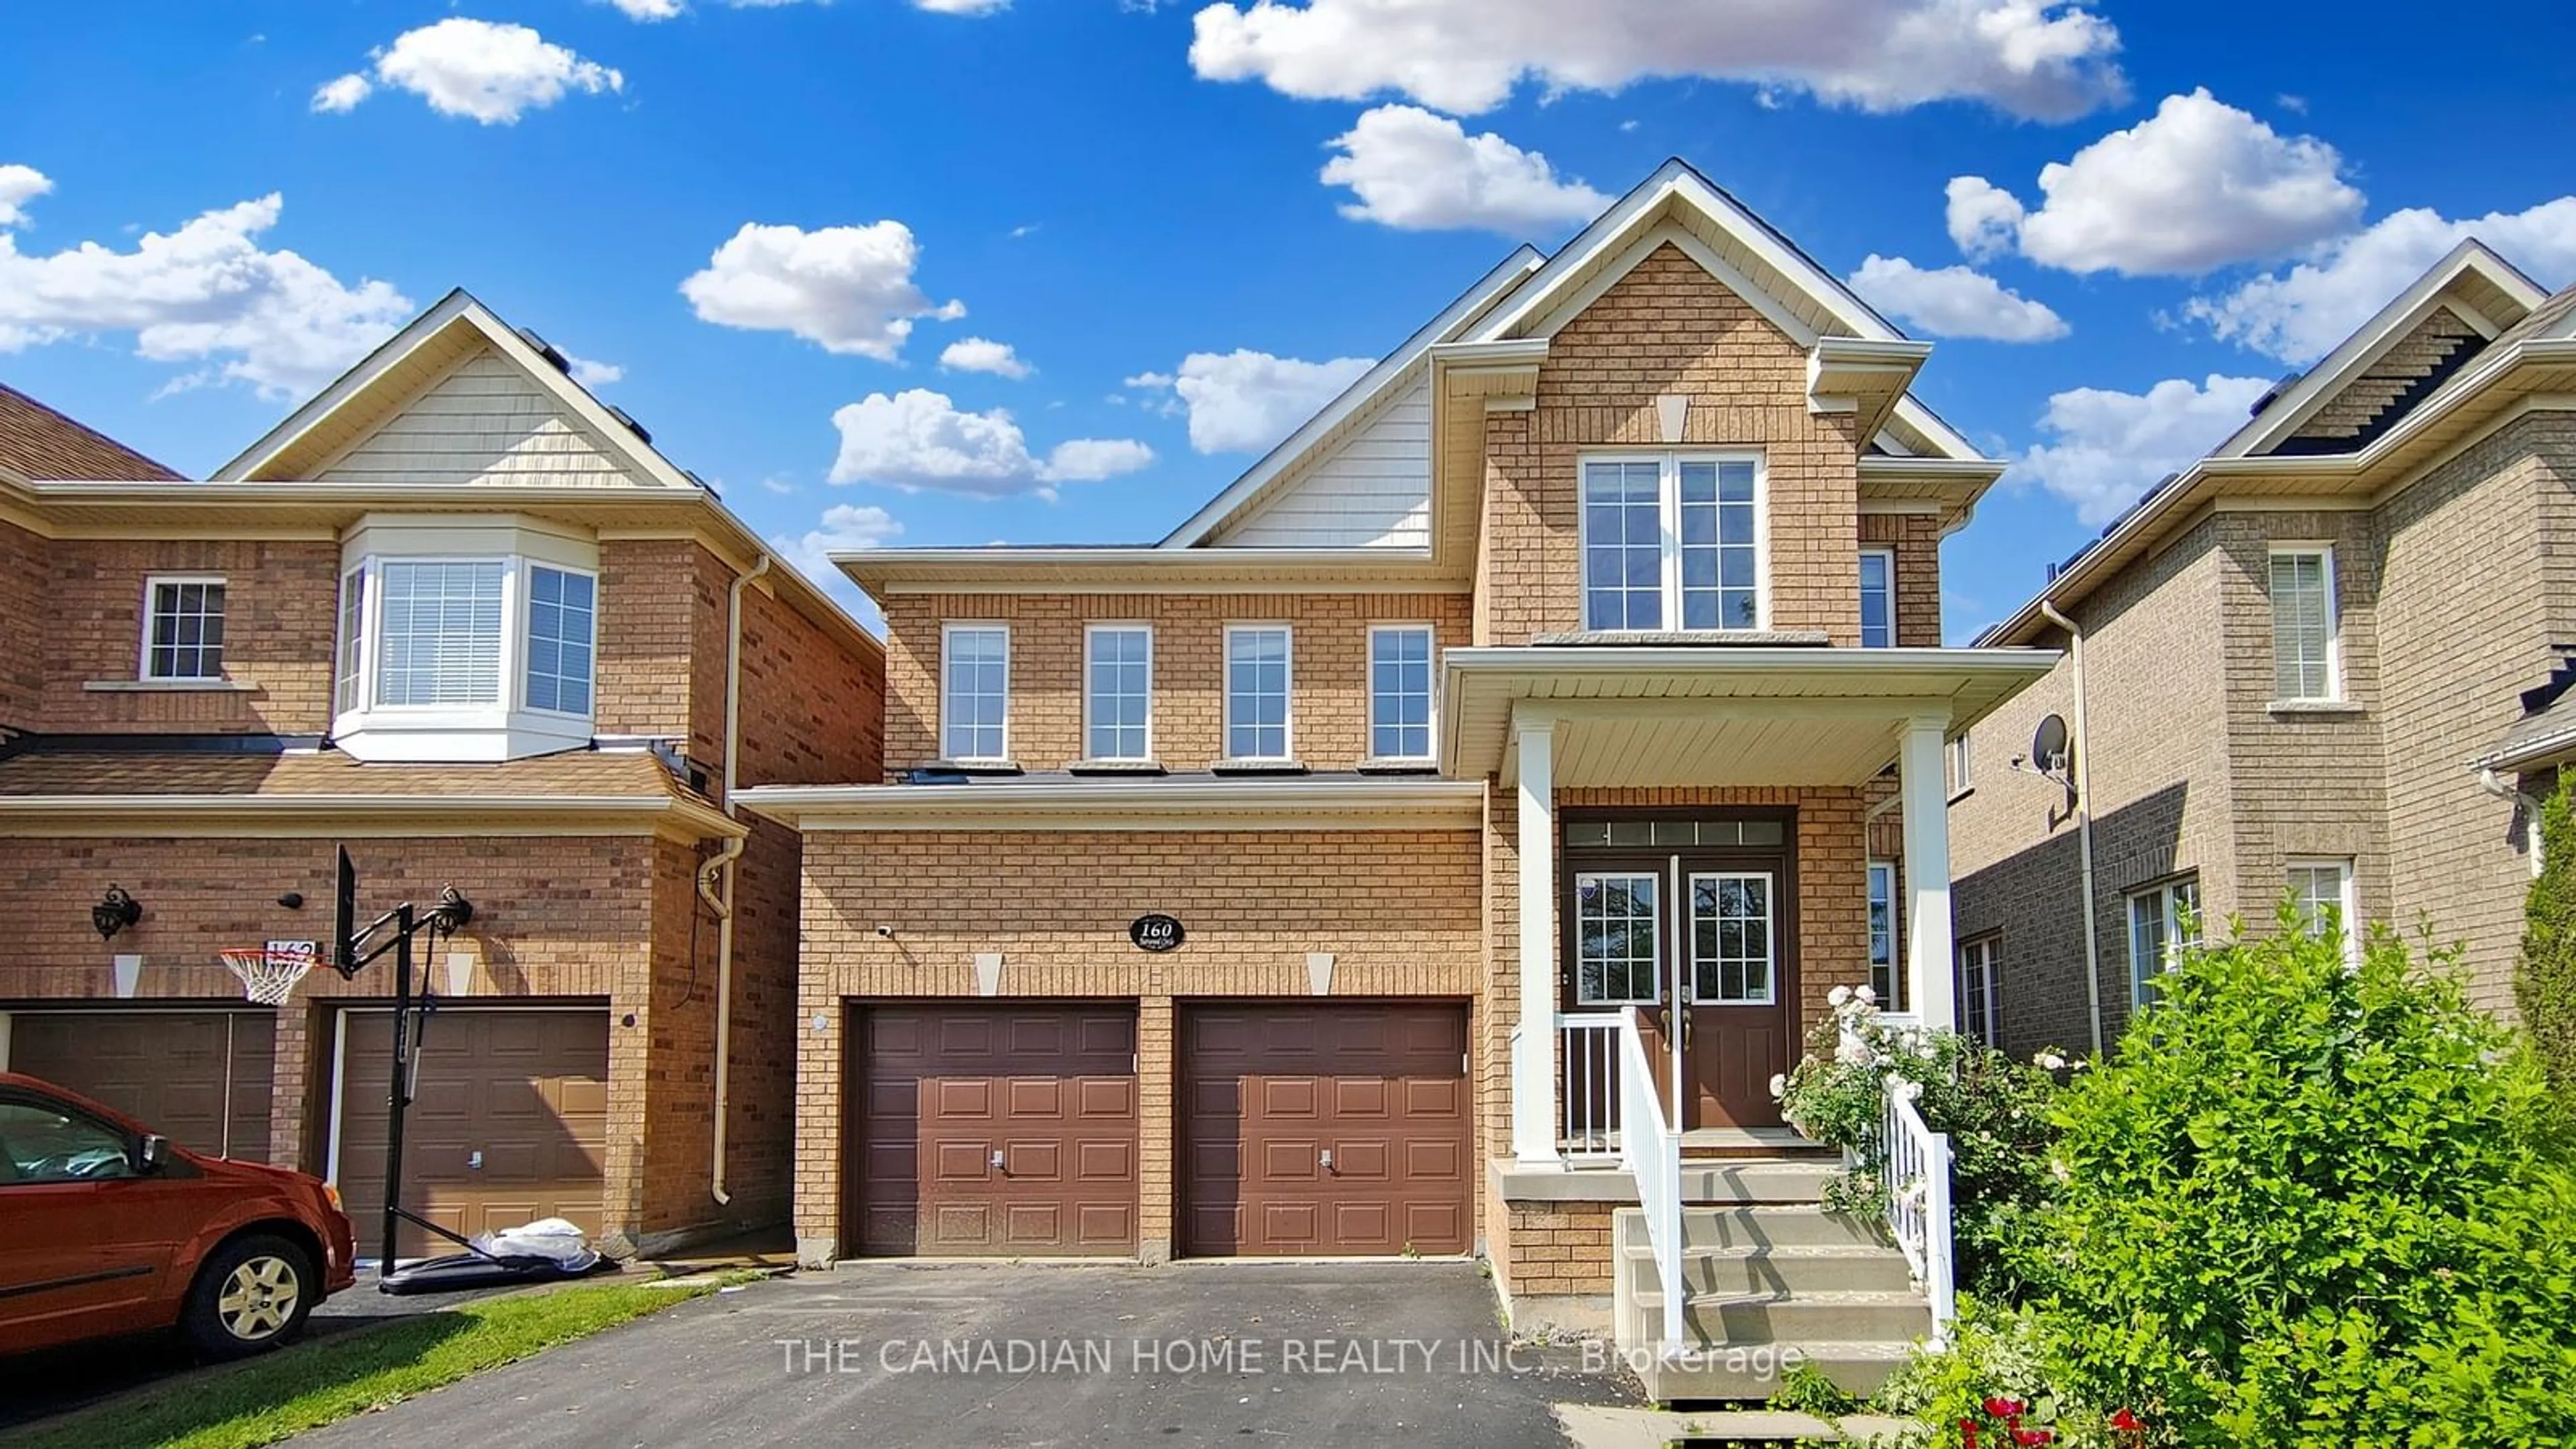 Home with brick exterior material for 160 Fairwood Circ, Brampton Ontario L6R 0X3